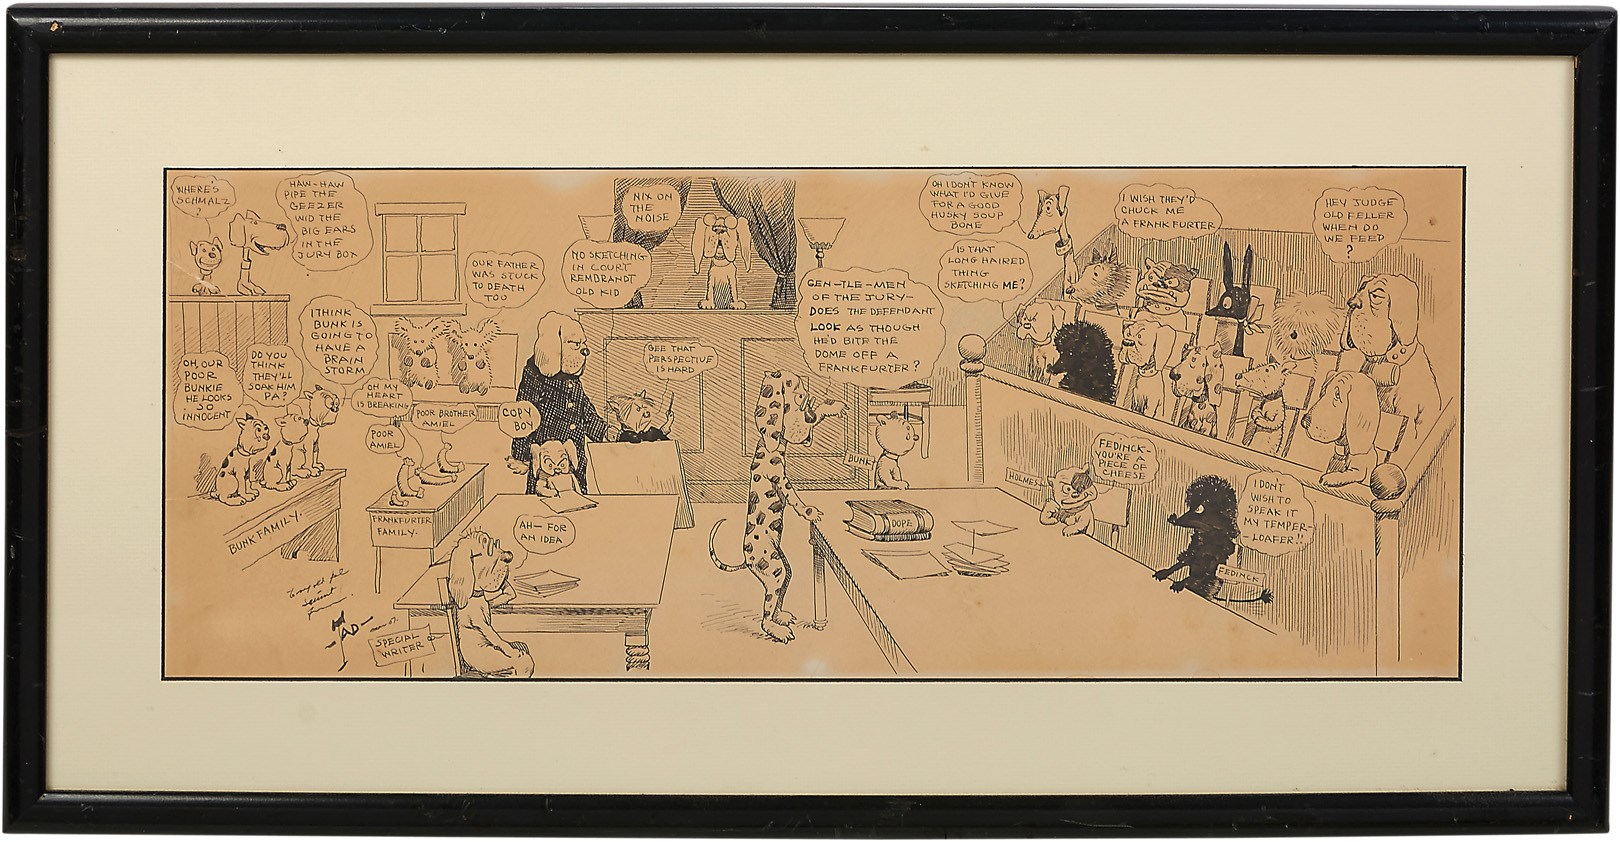 - 1907 "Frankfurter" Comic Art by Hot Dog "Creator"